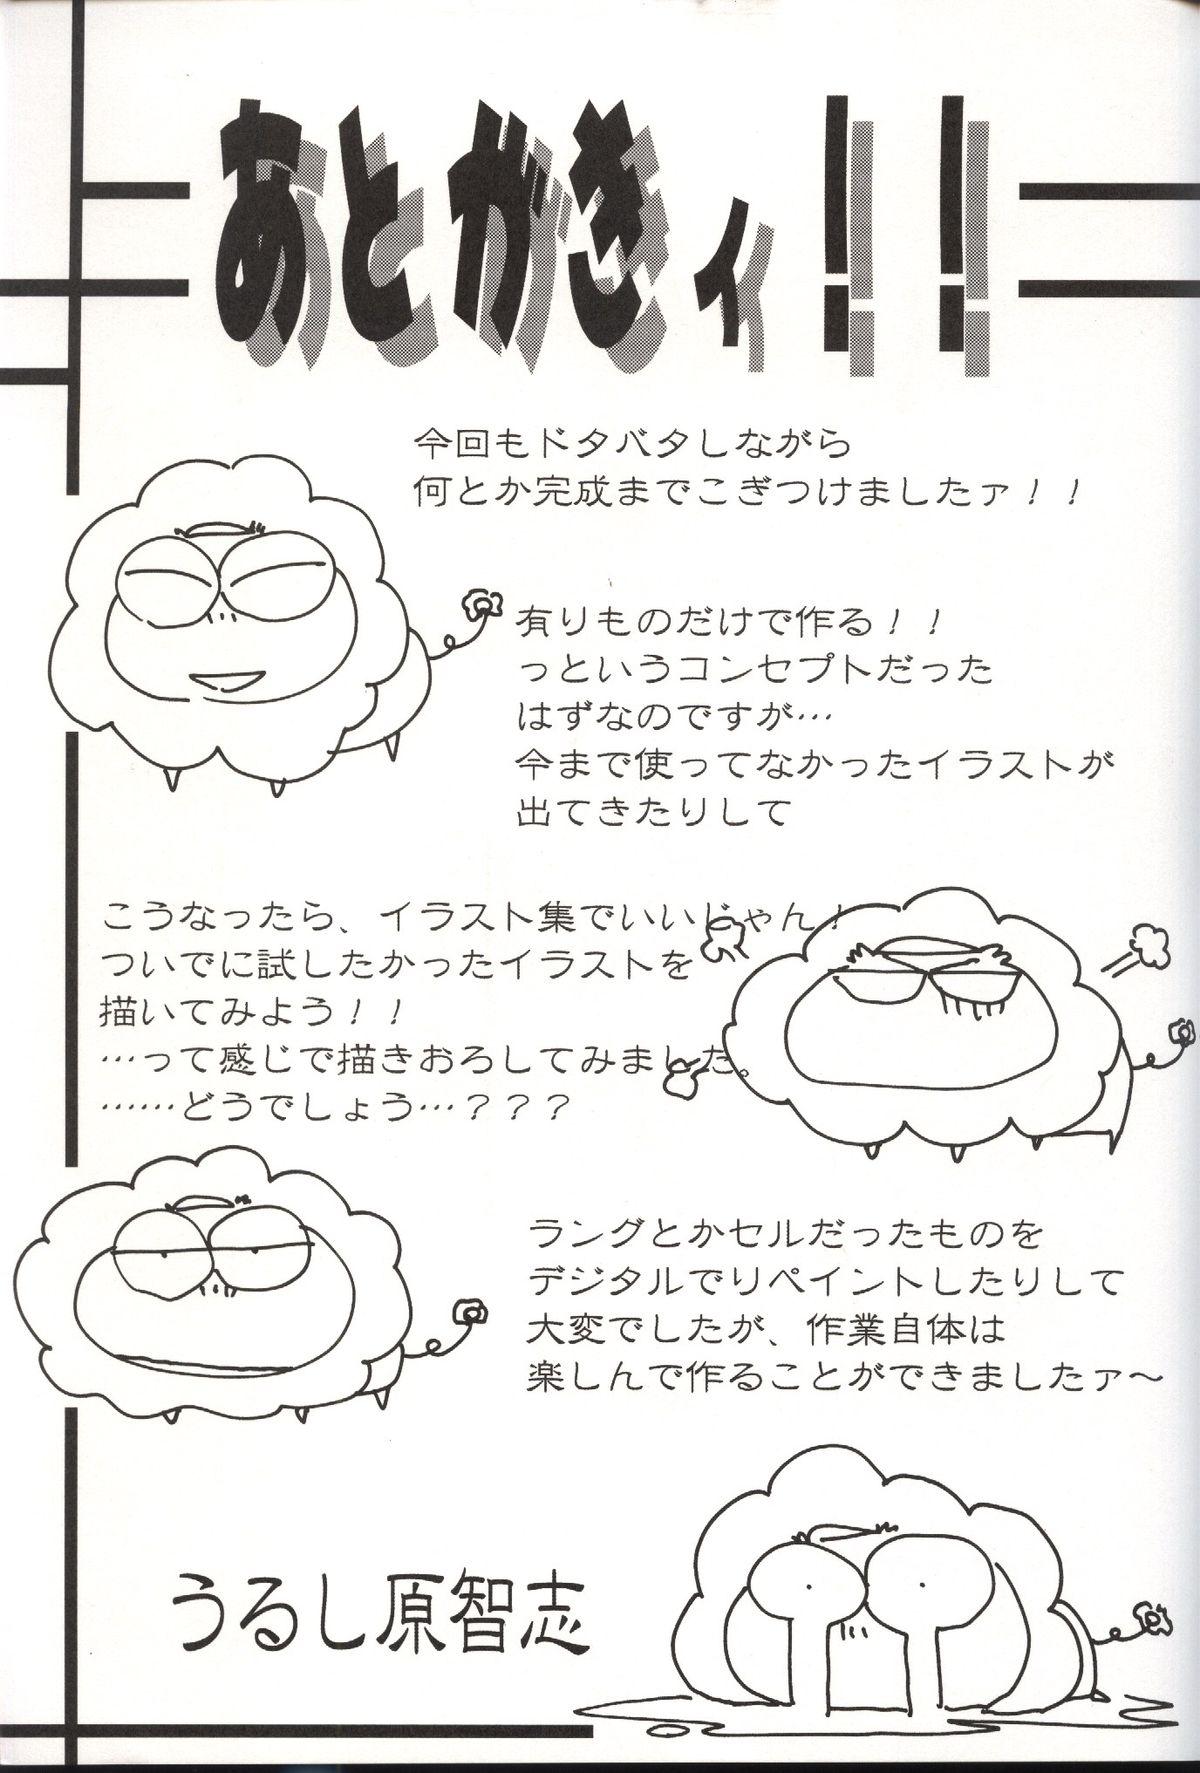 Cumming Urushihara Satoshi Illustration Shuu Sigma Machine - Page 120